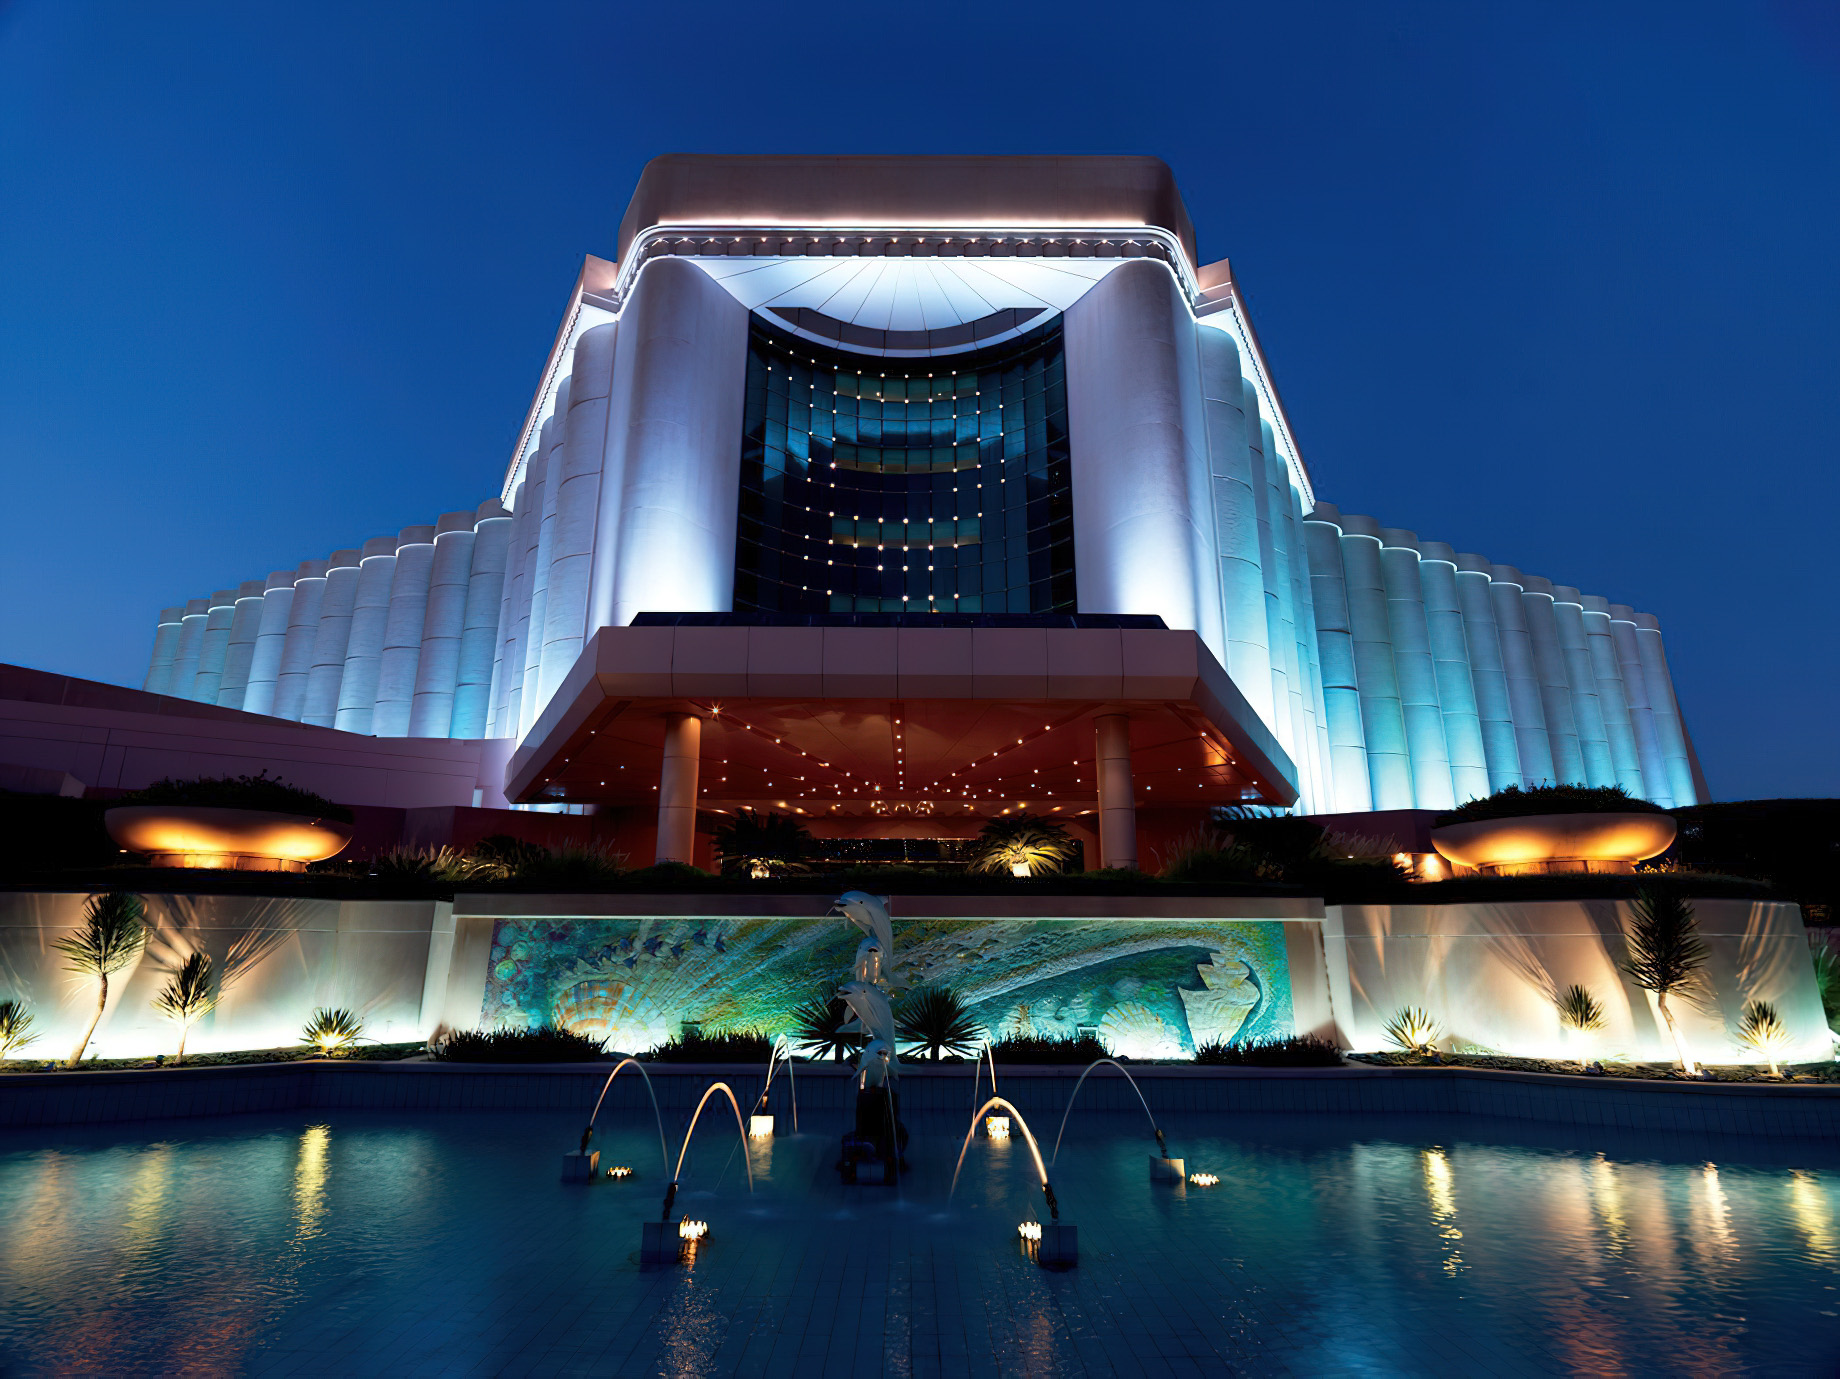 The Ritz-Carlton, Bahrain Resort Hotel - Manama, Bahrain - Hotel Exterior Night View